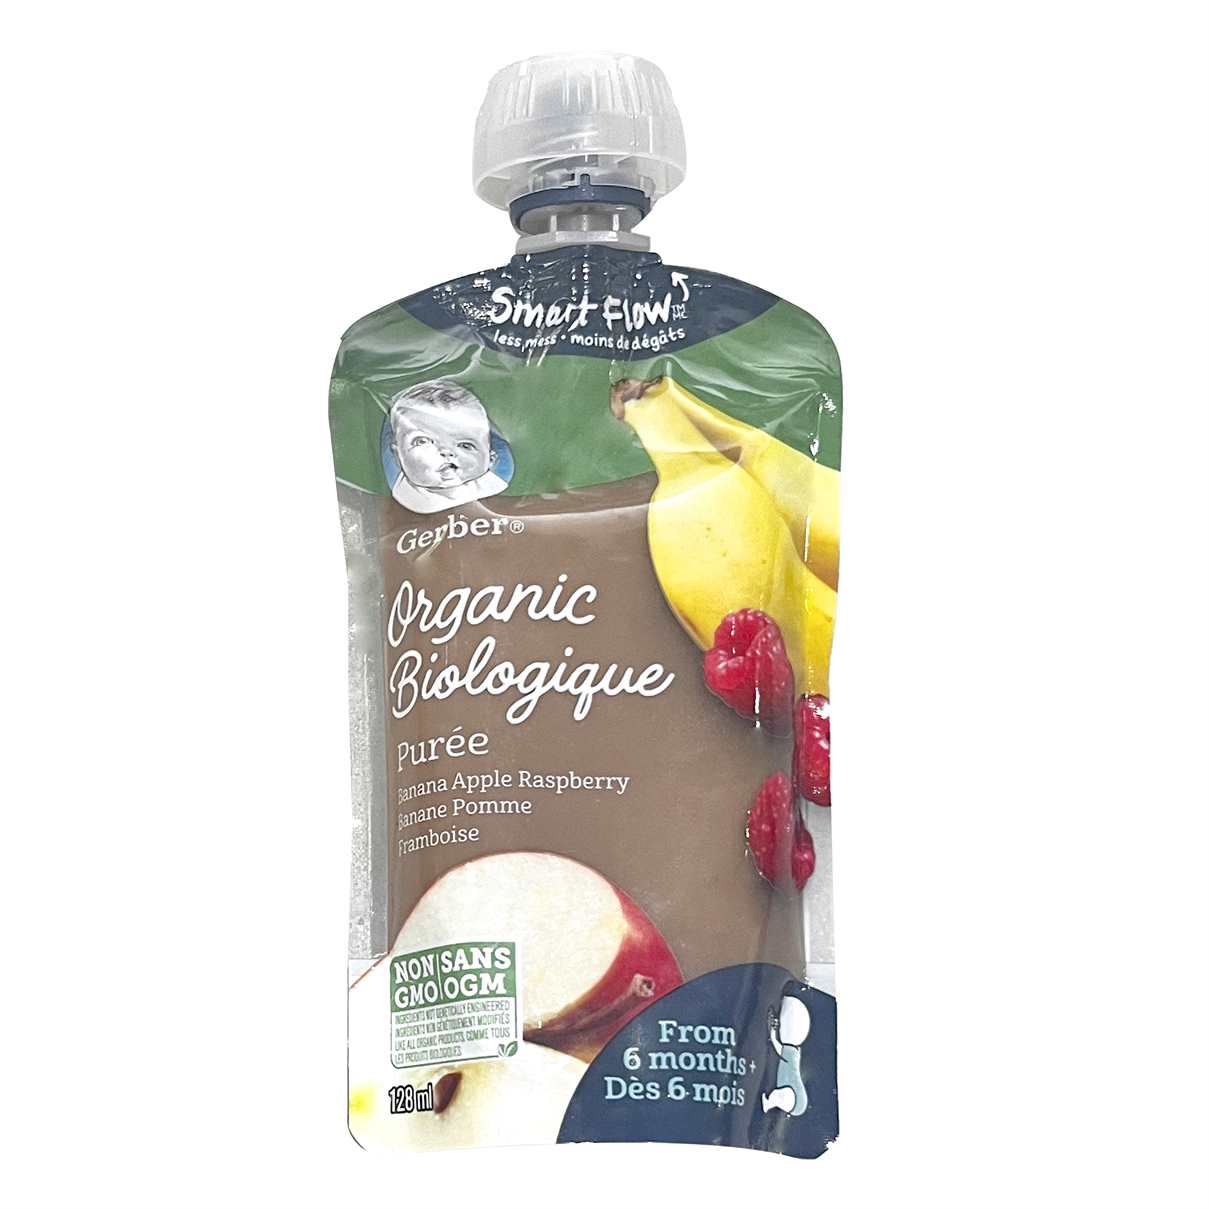 Gerber Organic Biologique Puree for Babies, Banana, Apple & Raspberry - 128ml, 6 Months +